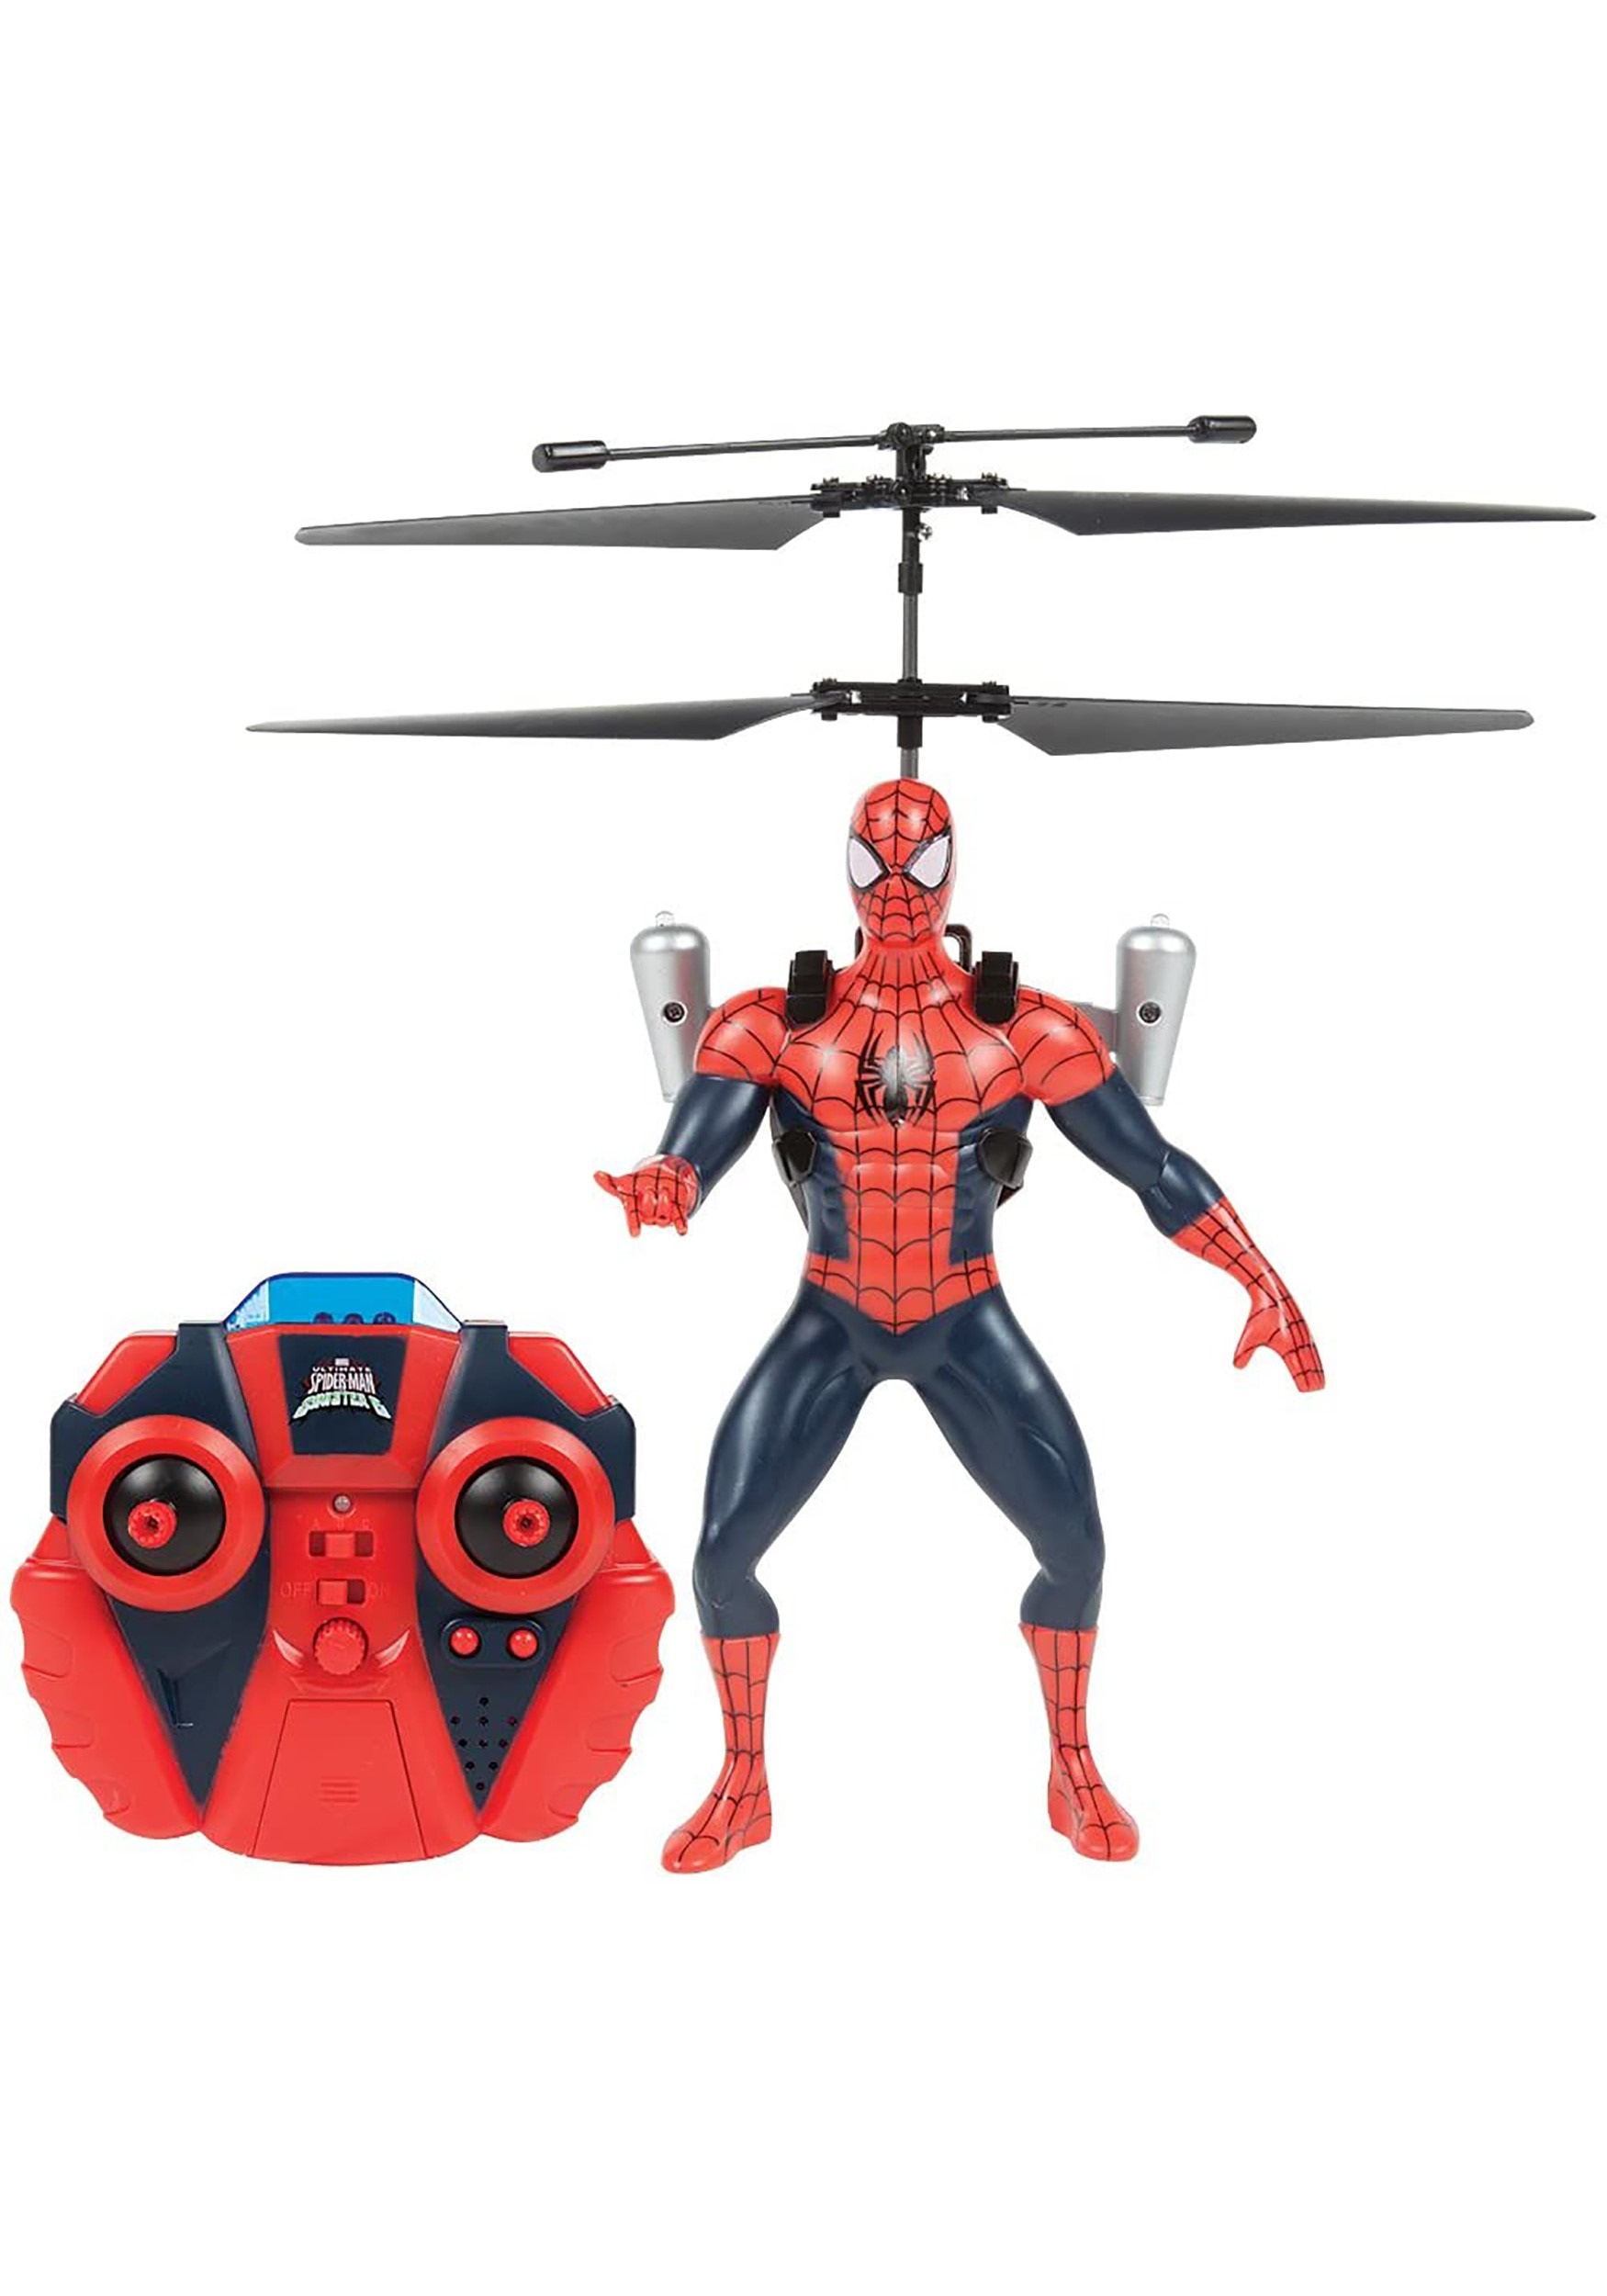 Marvel Flying Spider-Man Figure IR Helicopter